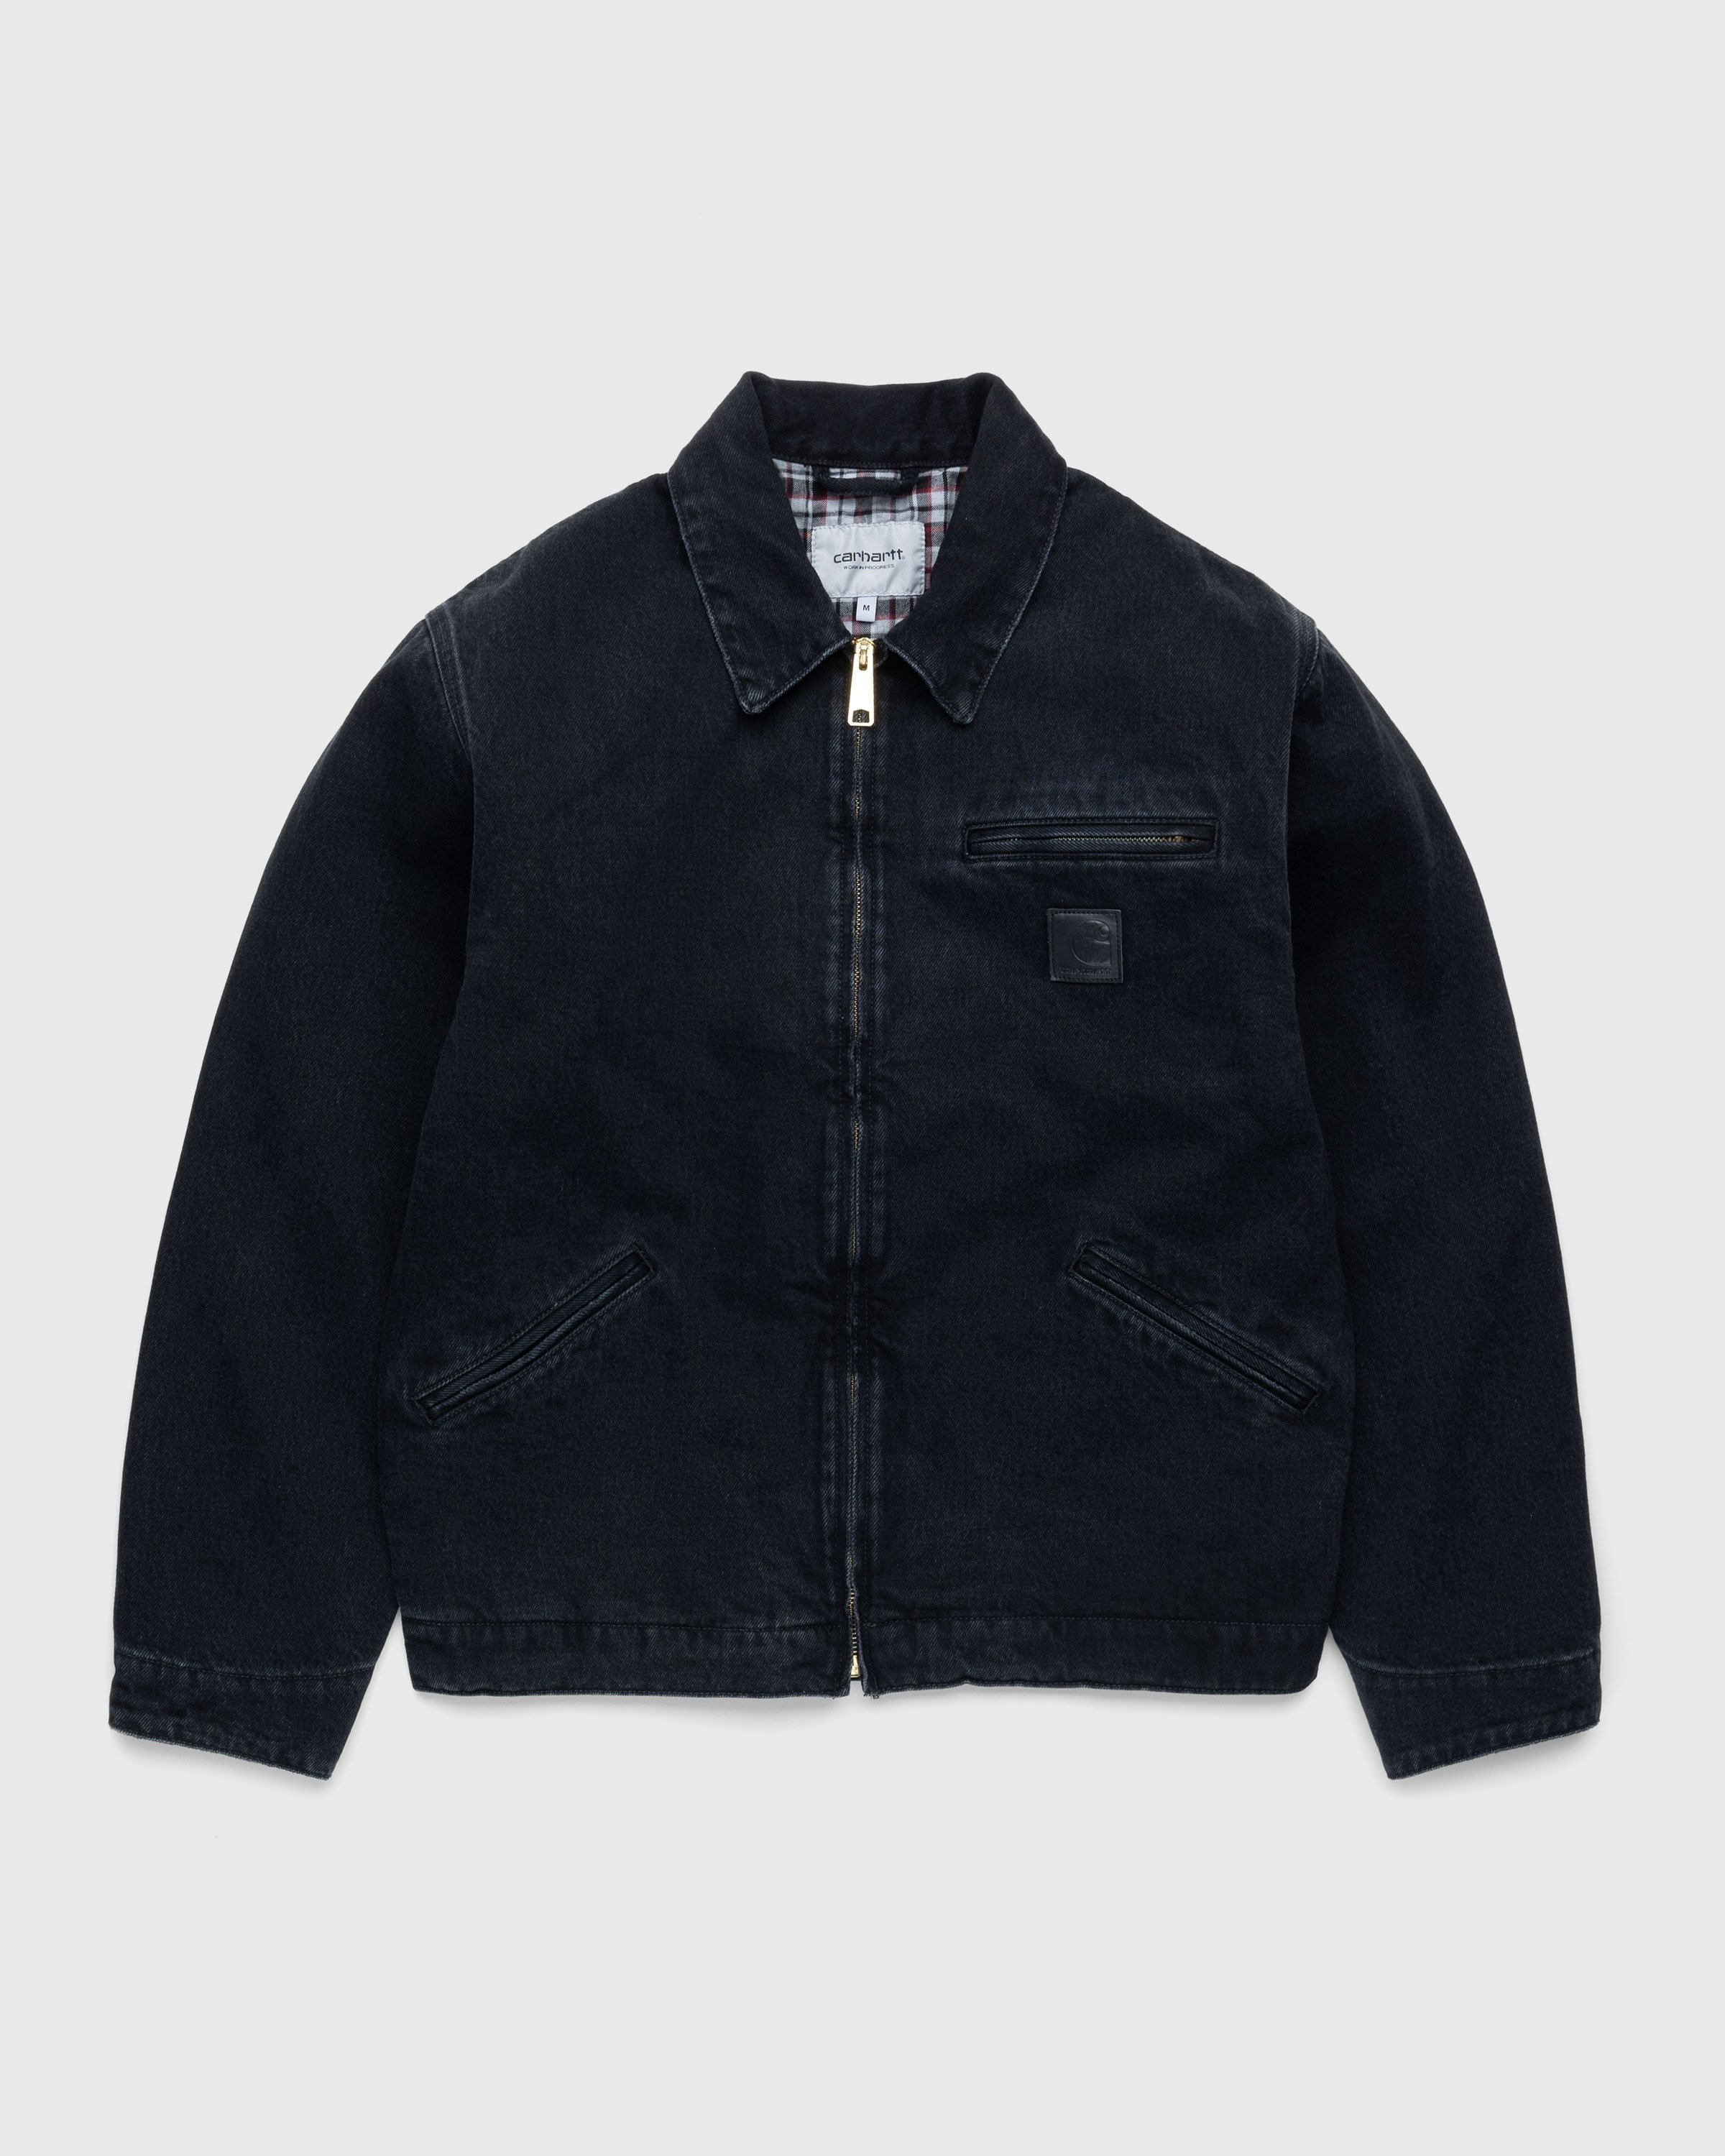 Carhartt WIP – Rider Jacket Stonewashed Black | Highsnobiety Shop